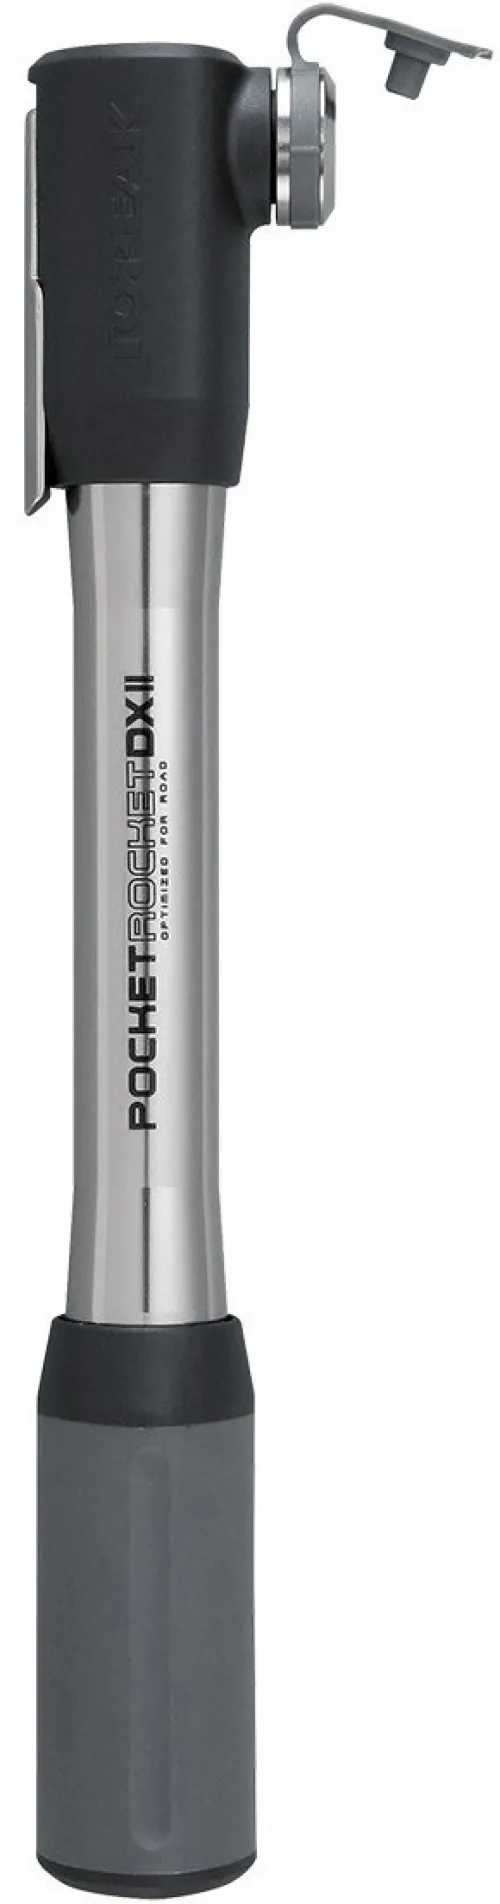 Насос Topeak Pocket Rocket DX II, 160psi/11bar